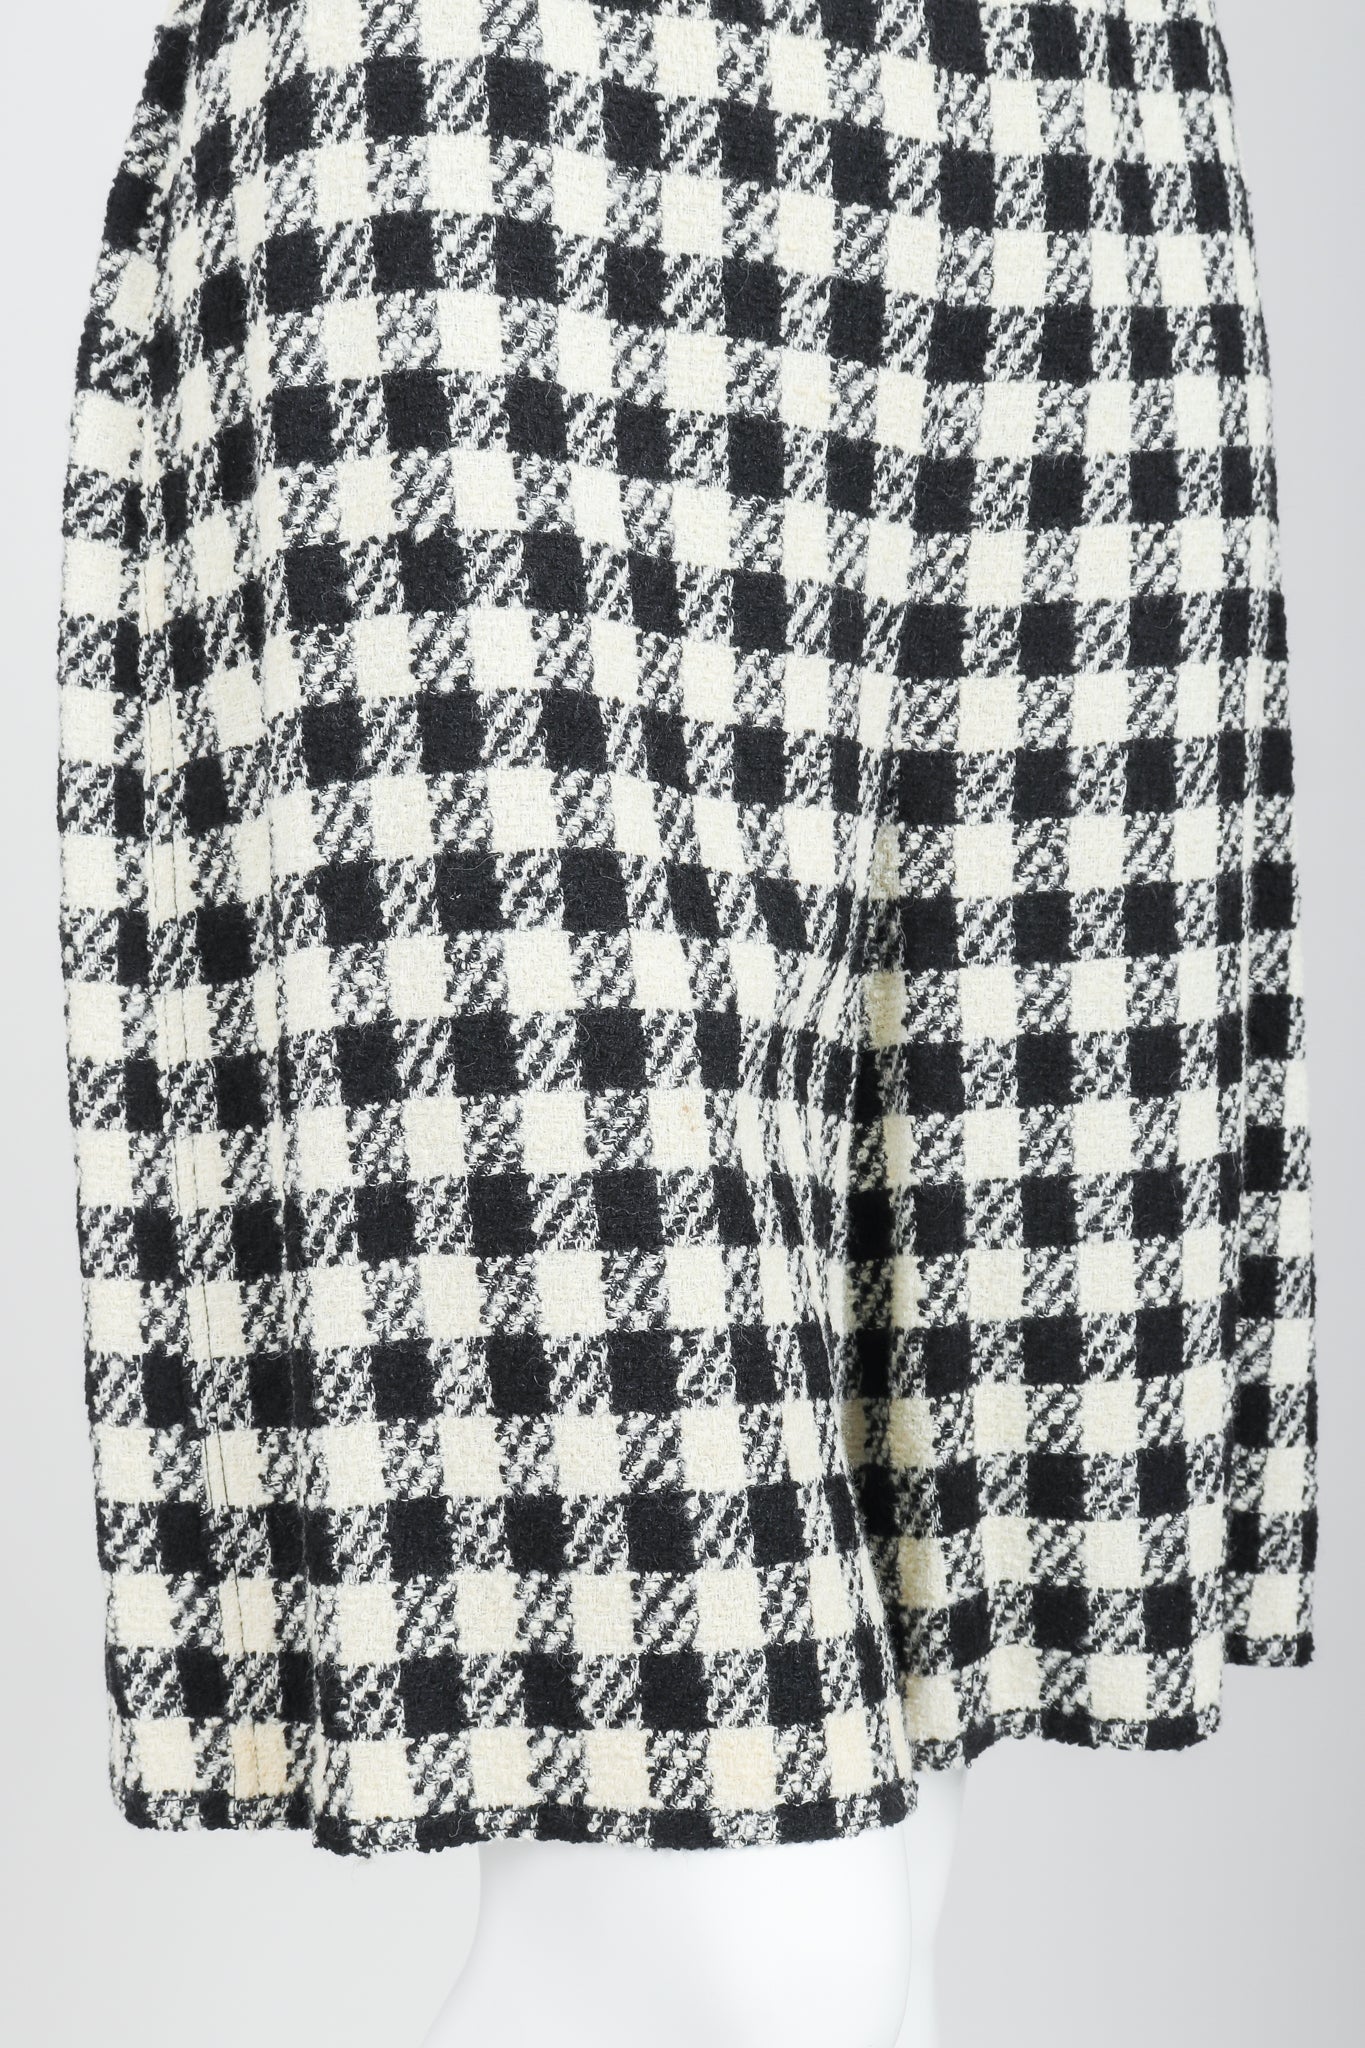 Vintage Sonia Rykiel Bouclé Checked Shorts on Mannequin crop at Recess Los Angeles